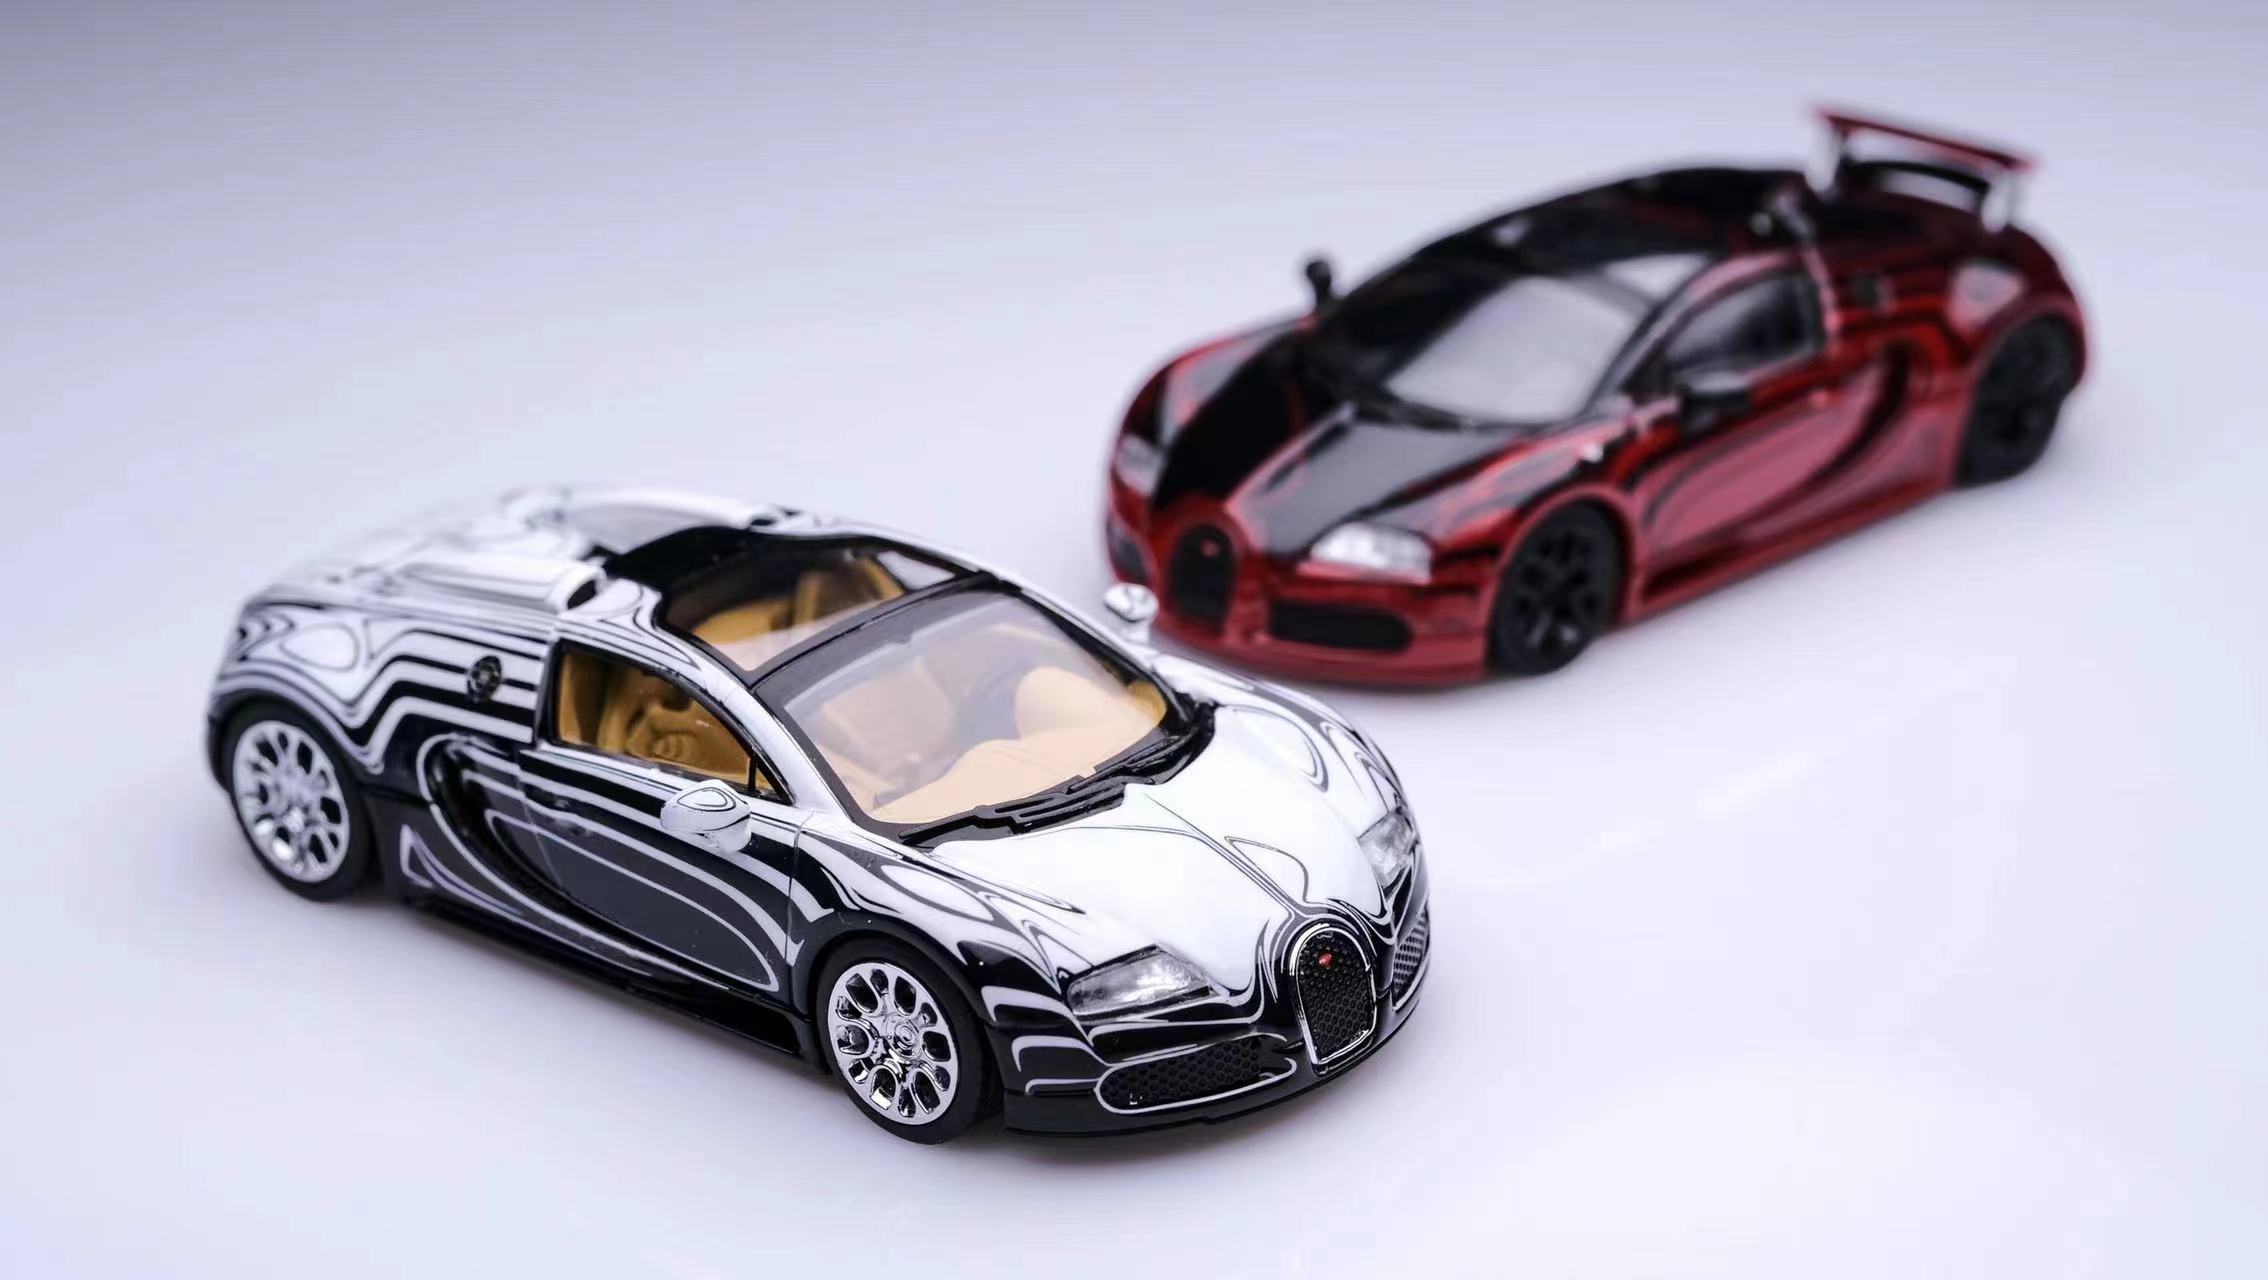 Mortal 1:64布加迪 Veyron威龙威航定制陶瓷版合金压铸模型车玩具